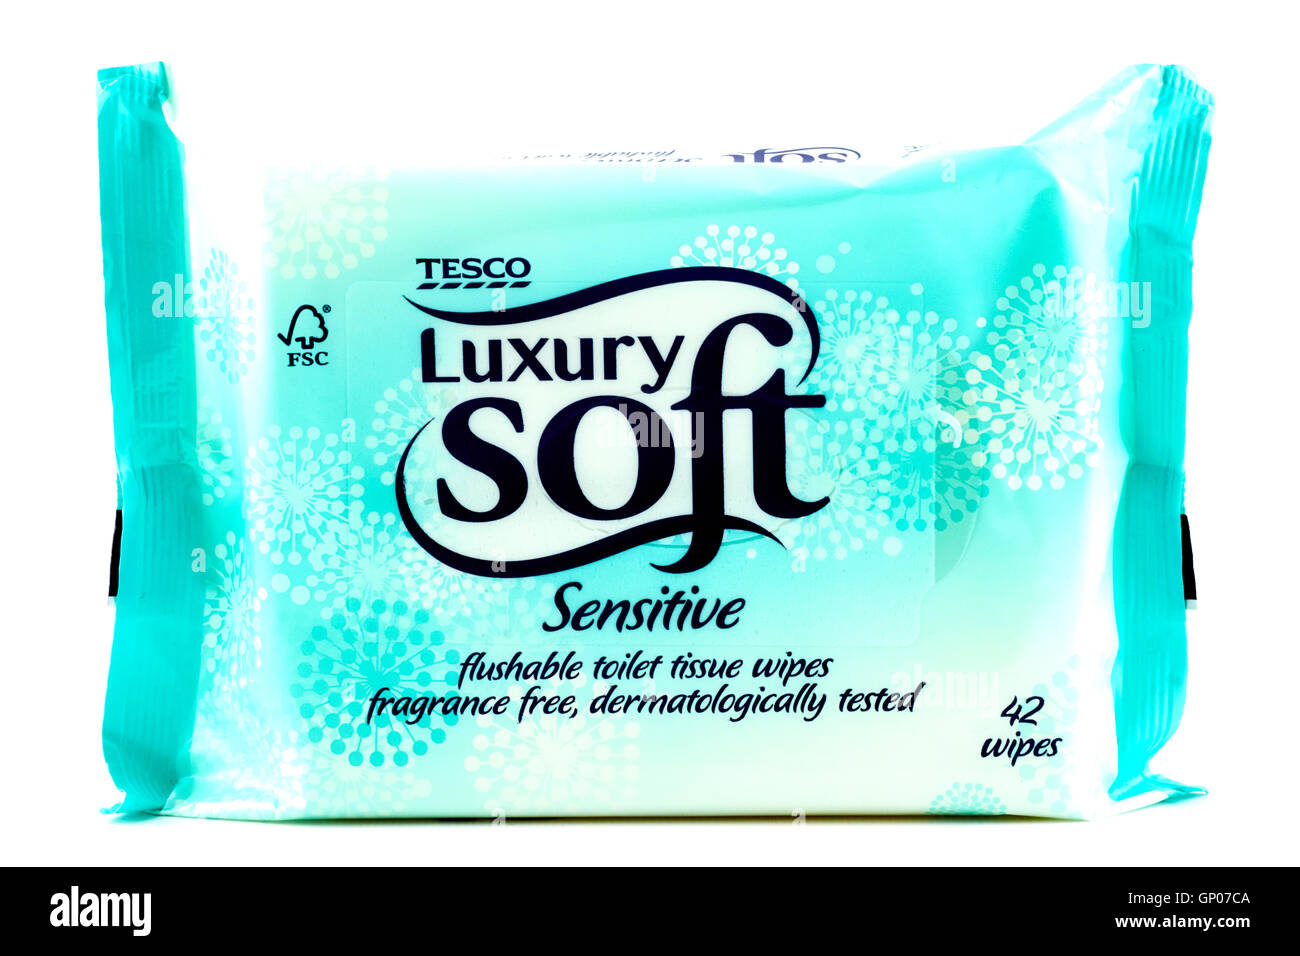 Tesco Luxury Soft Sensitive Flushable Toilet Tissue Wipes Stock Photo